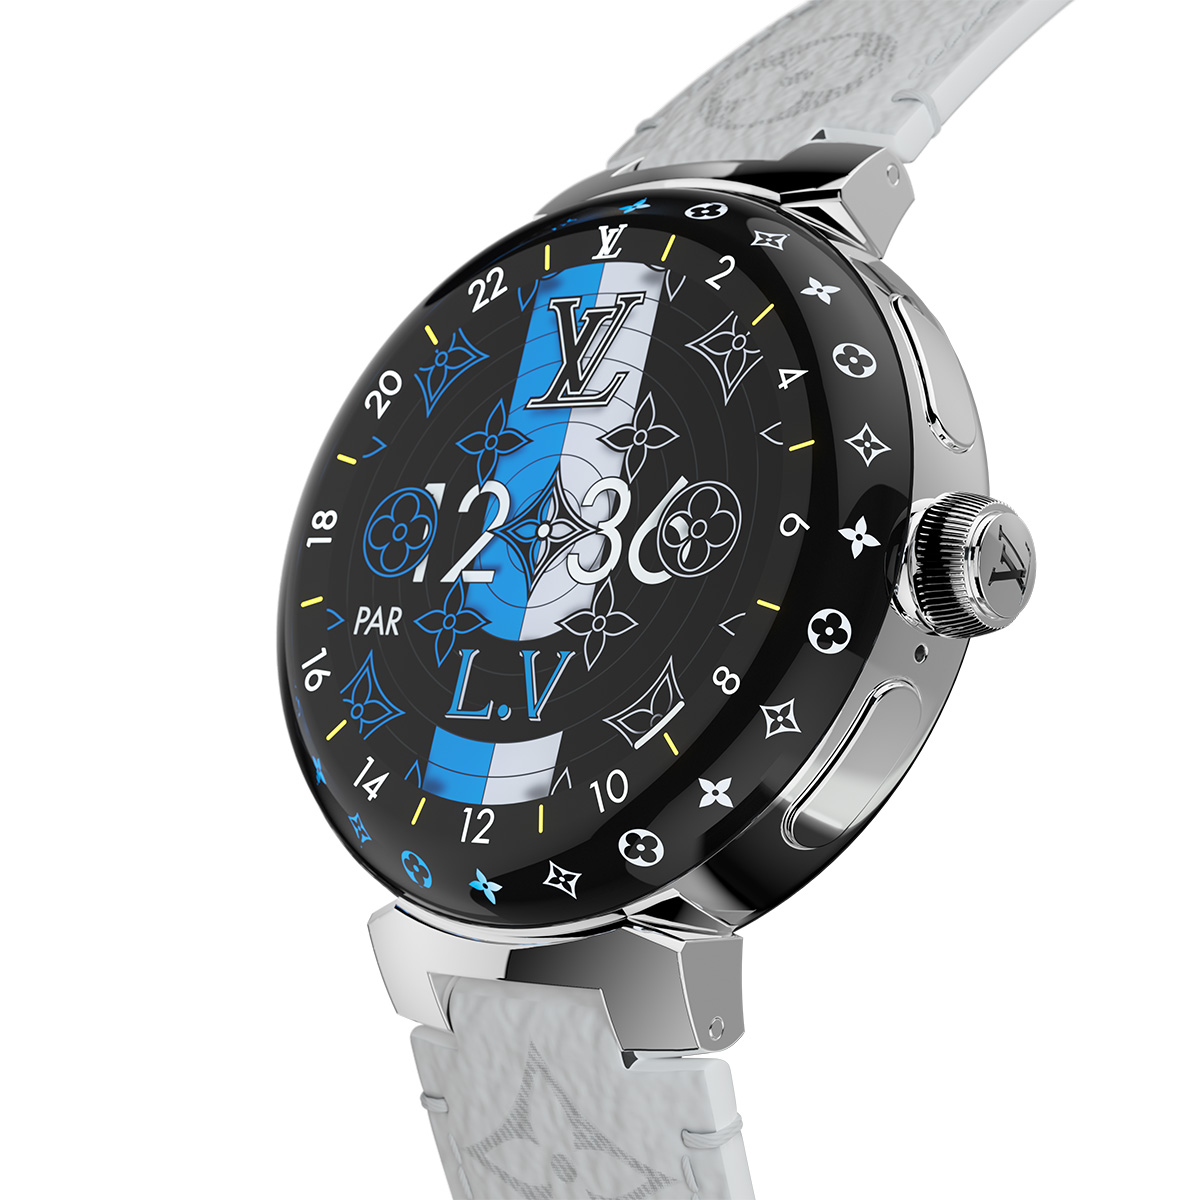 Louis Vuitton’s New Smart Watch: The Tambour Horizon Light Up